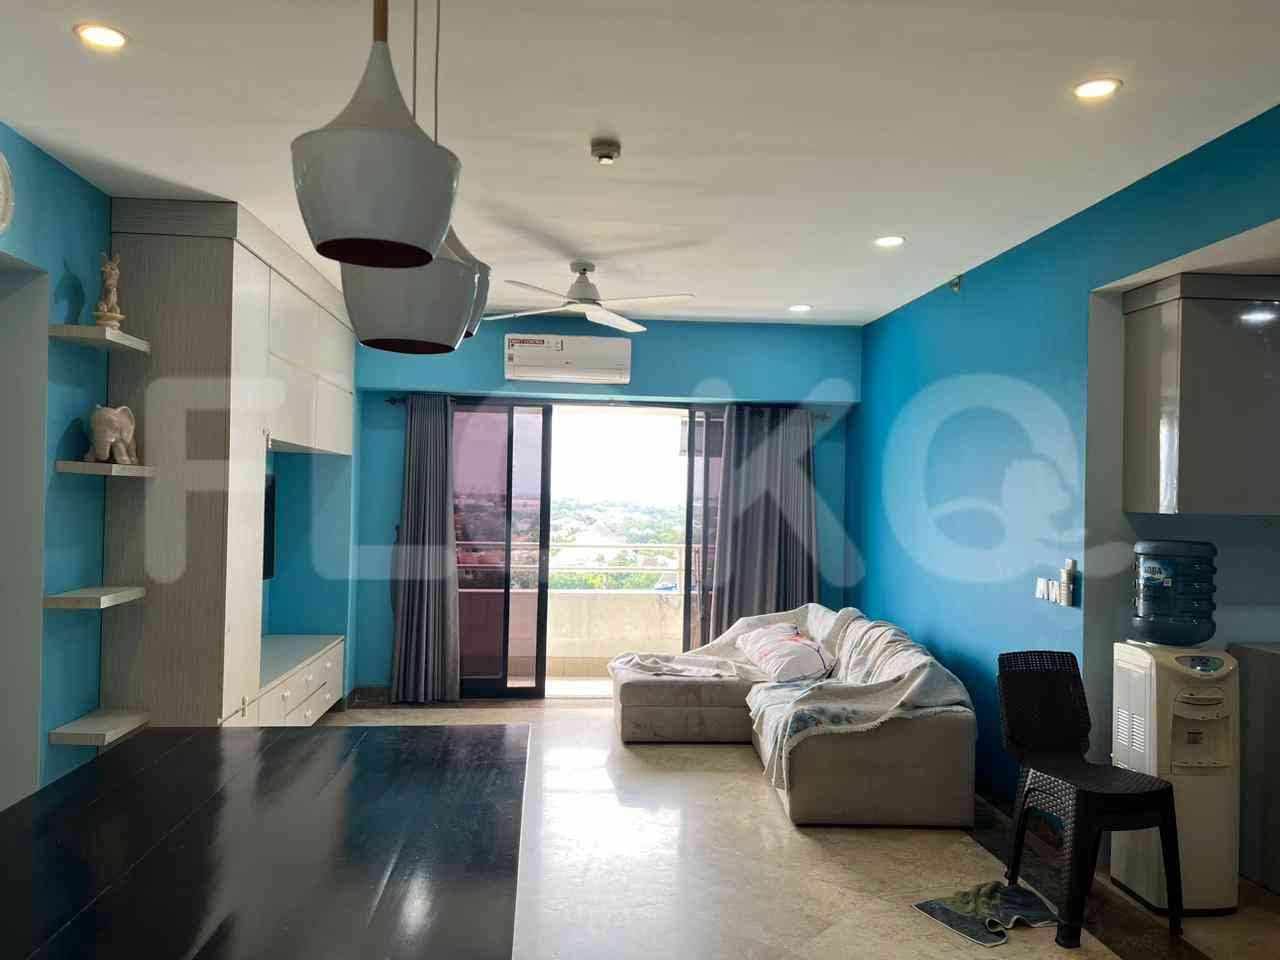 3 Bedroom on 10th Floor for Rent in BonaVista Apartment - fled92 1